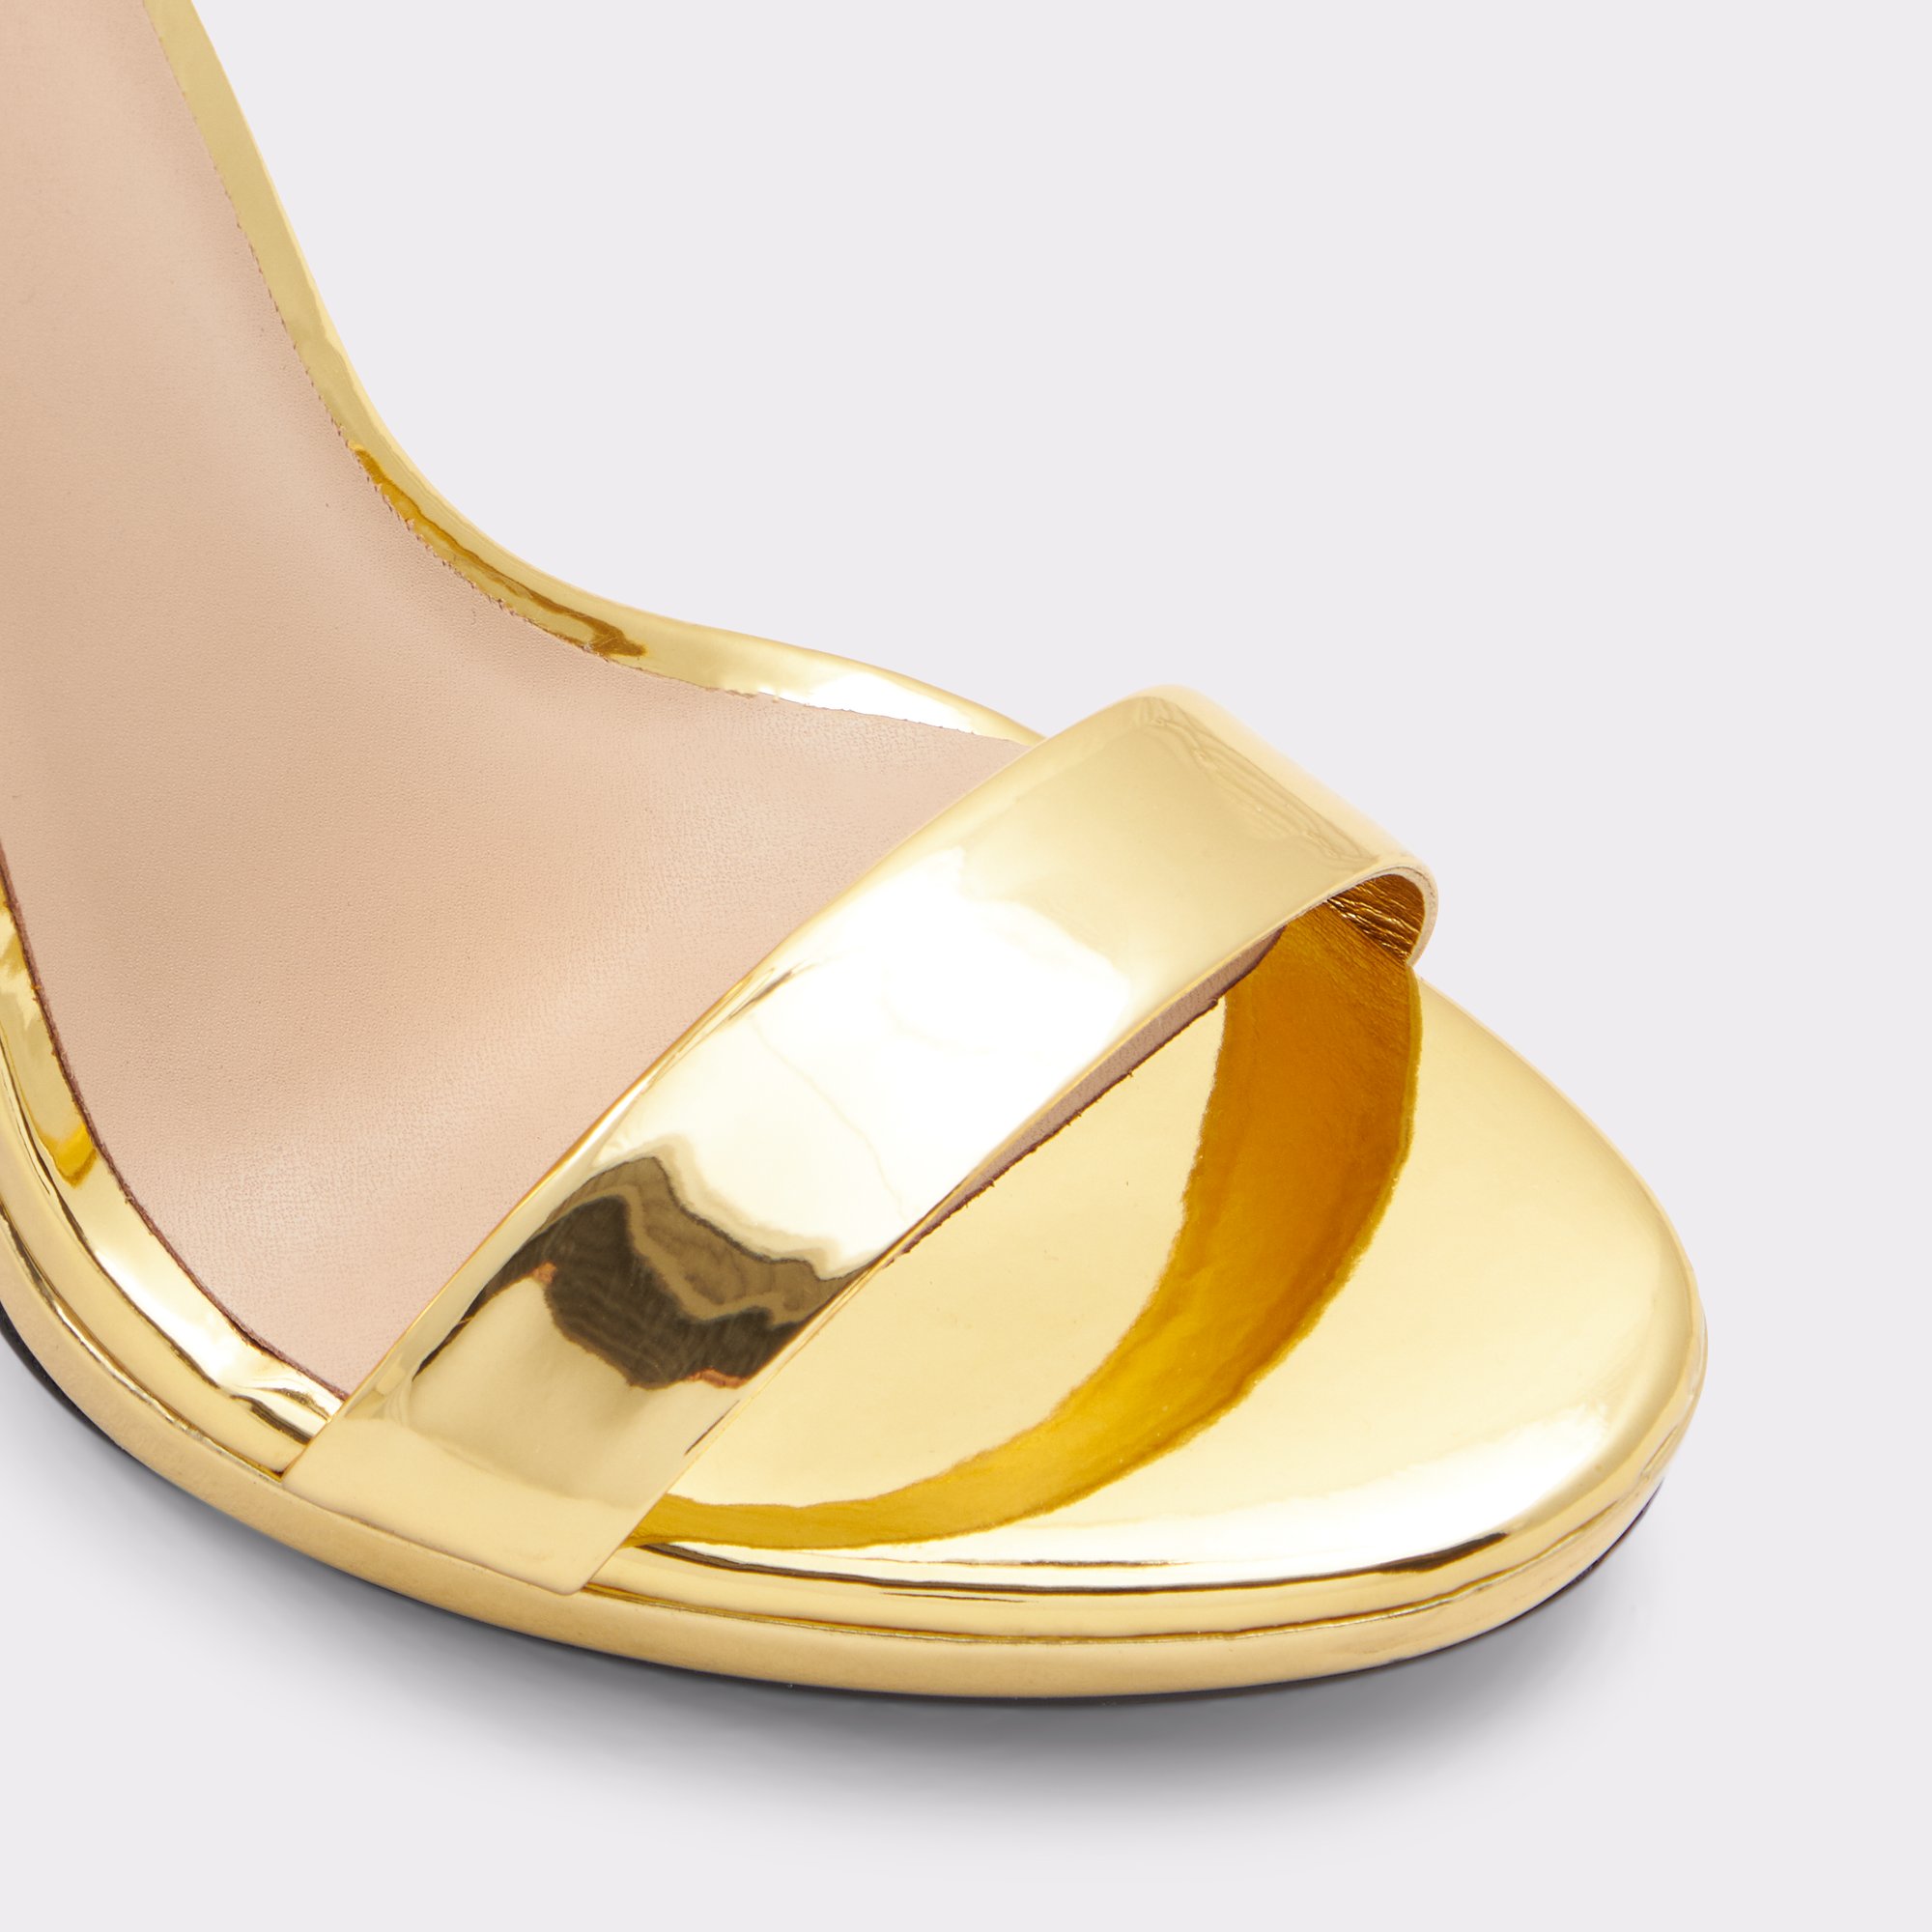 Kat Gold Women's Strappy sandals | ALDO US